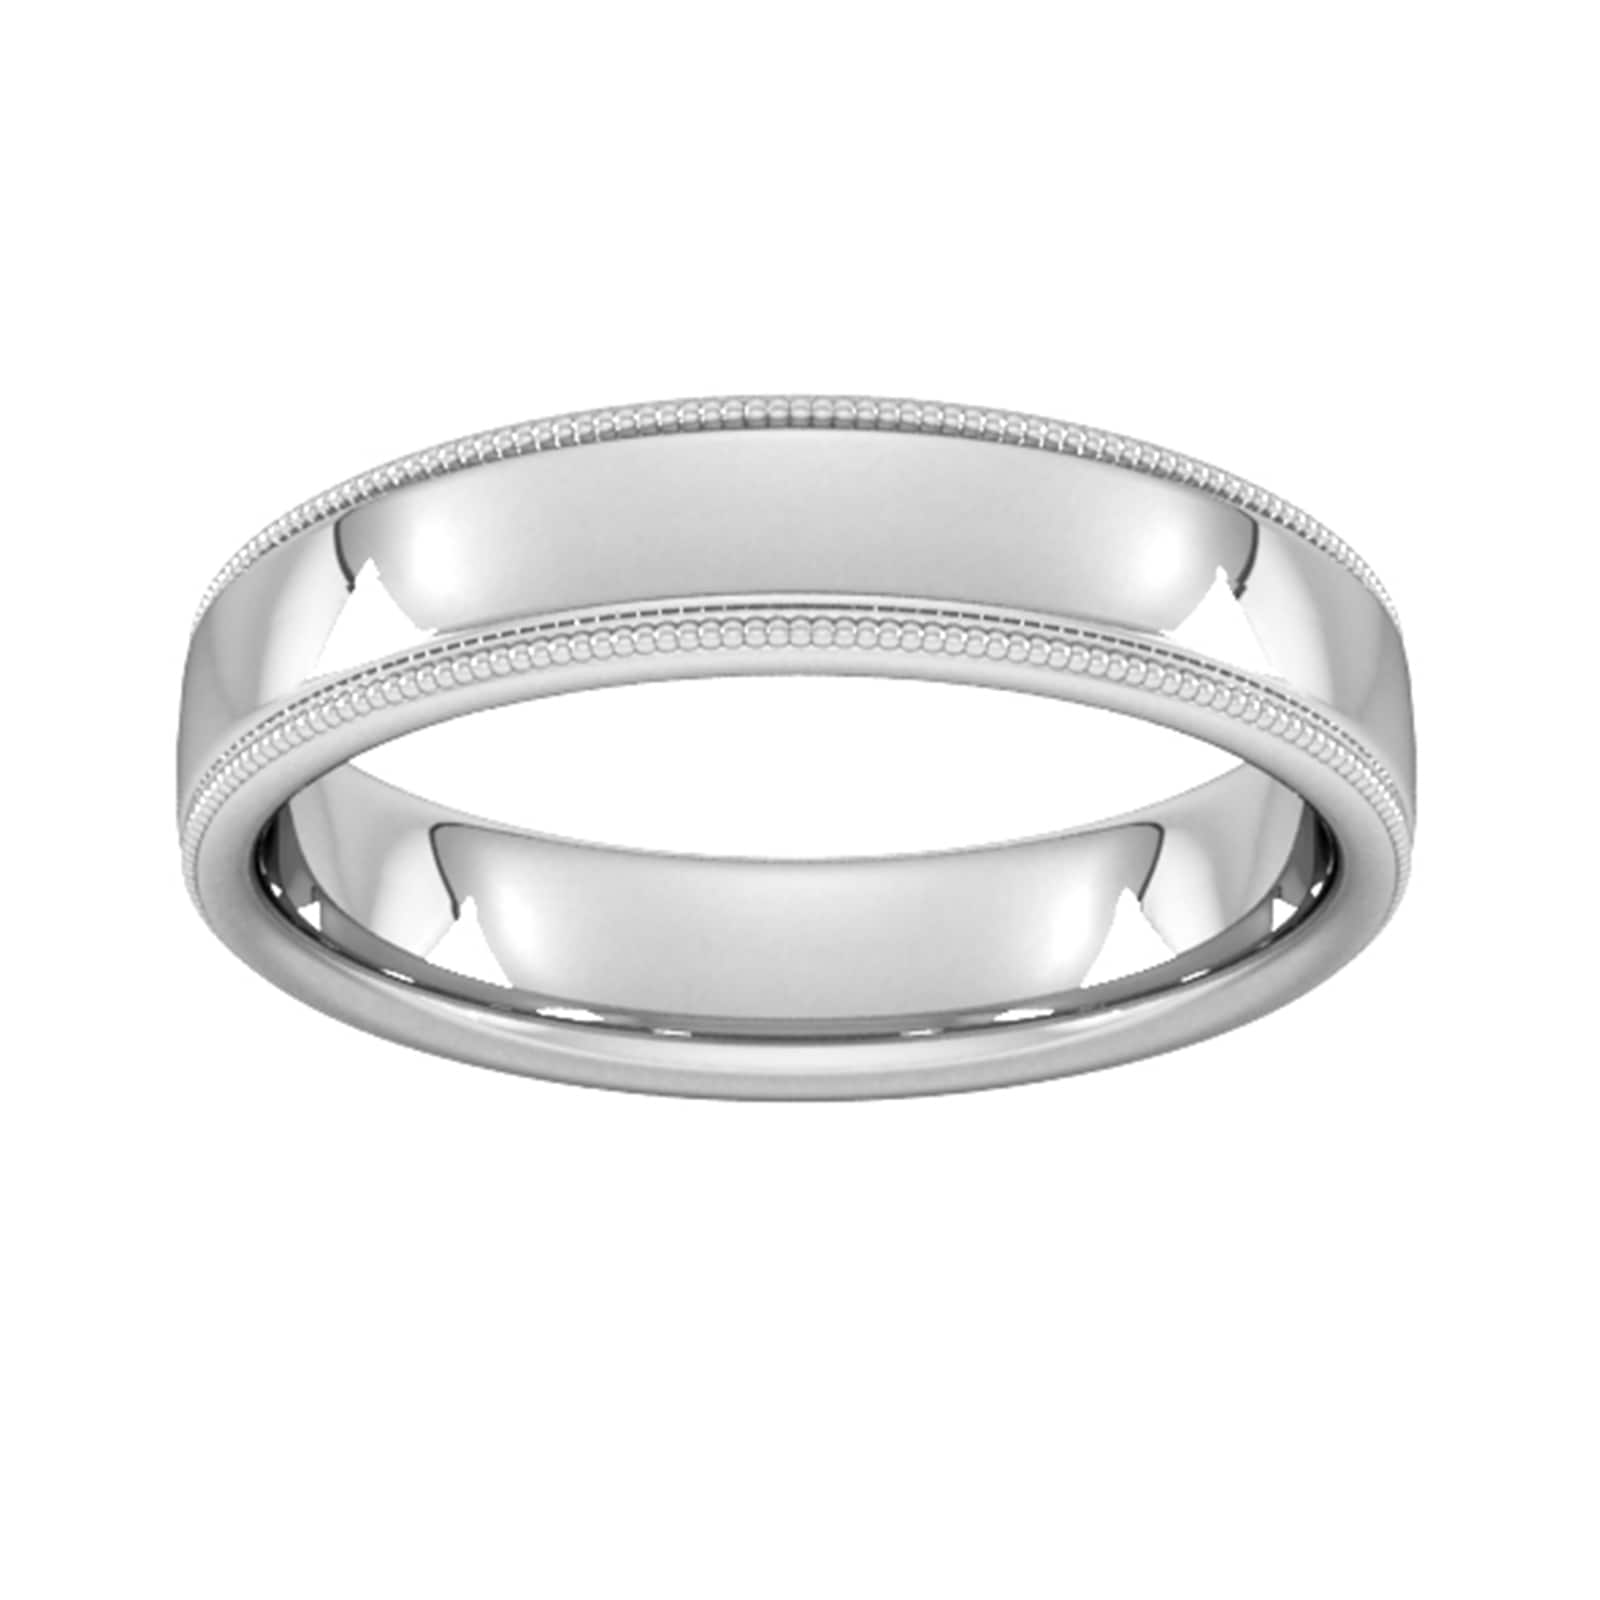 5mm Traditional Court Standard Milgrain Edge Wedding Ring In 18 Carat White Gold - Ring Size R